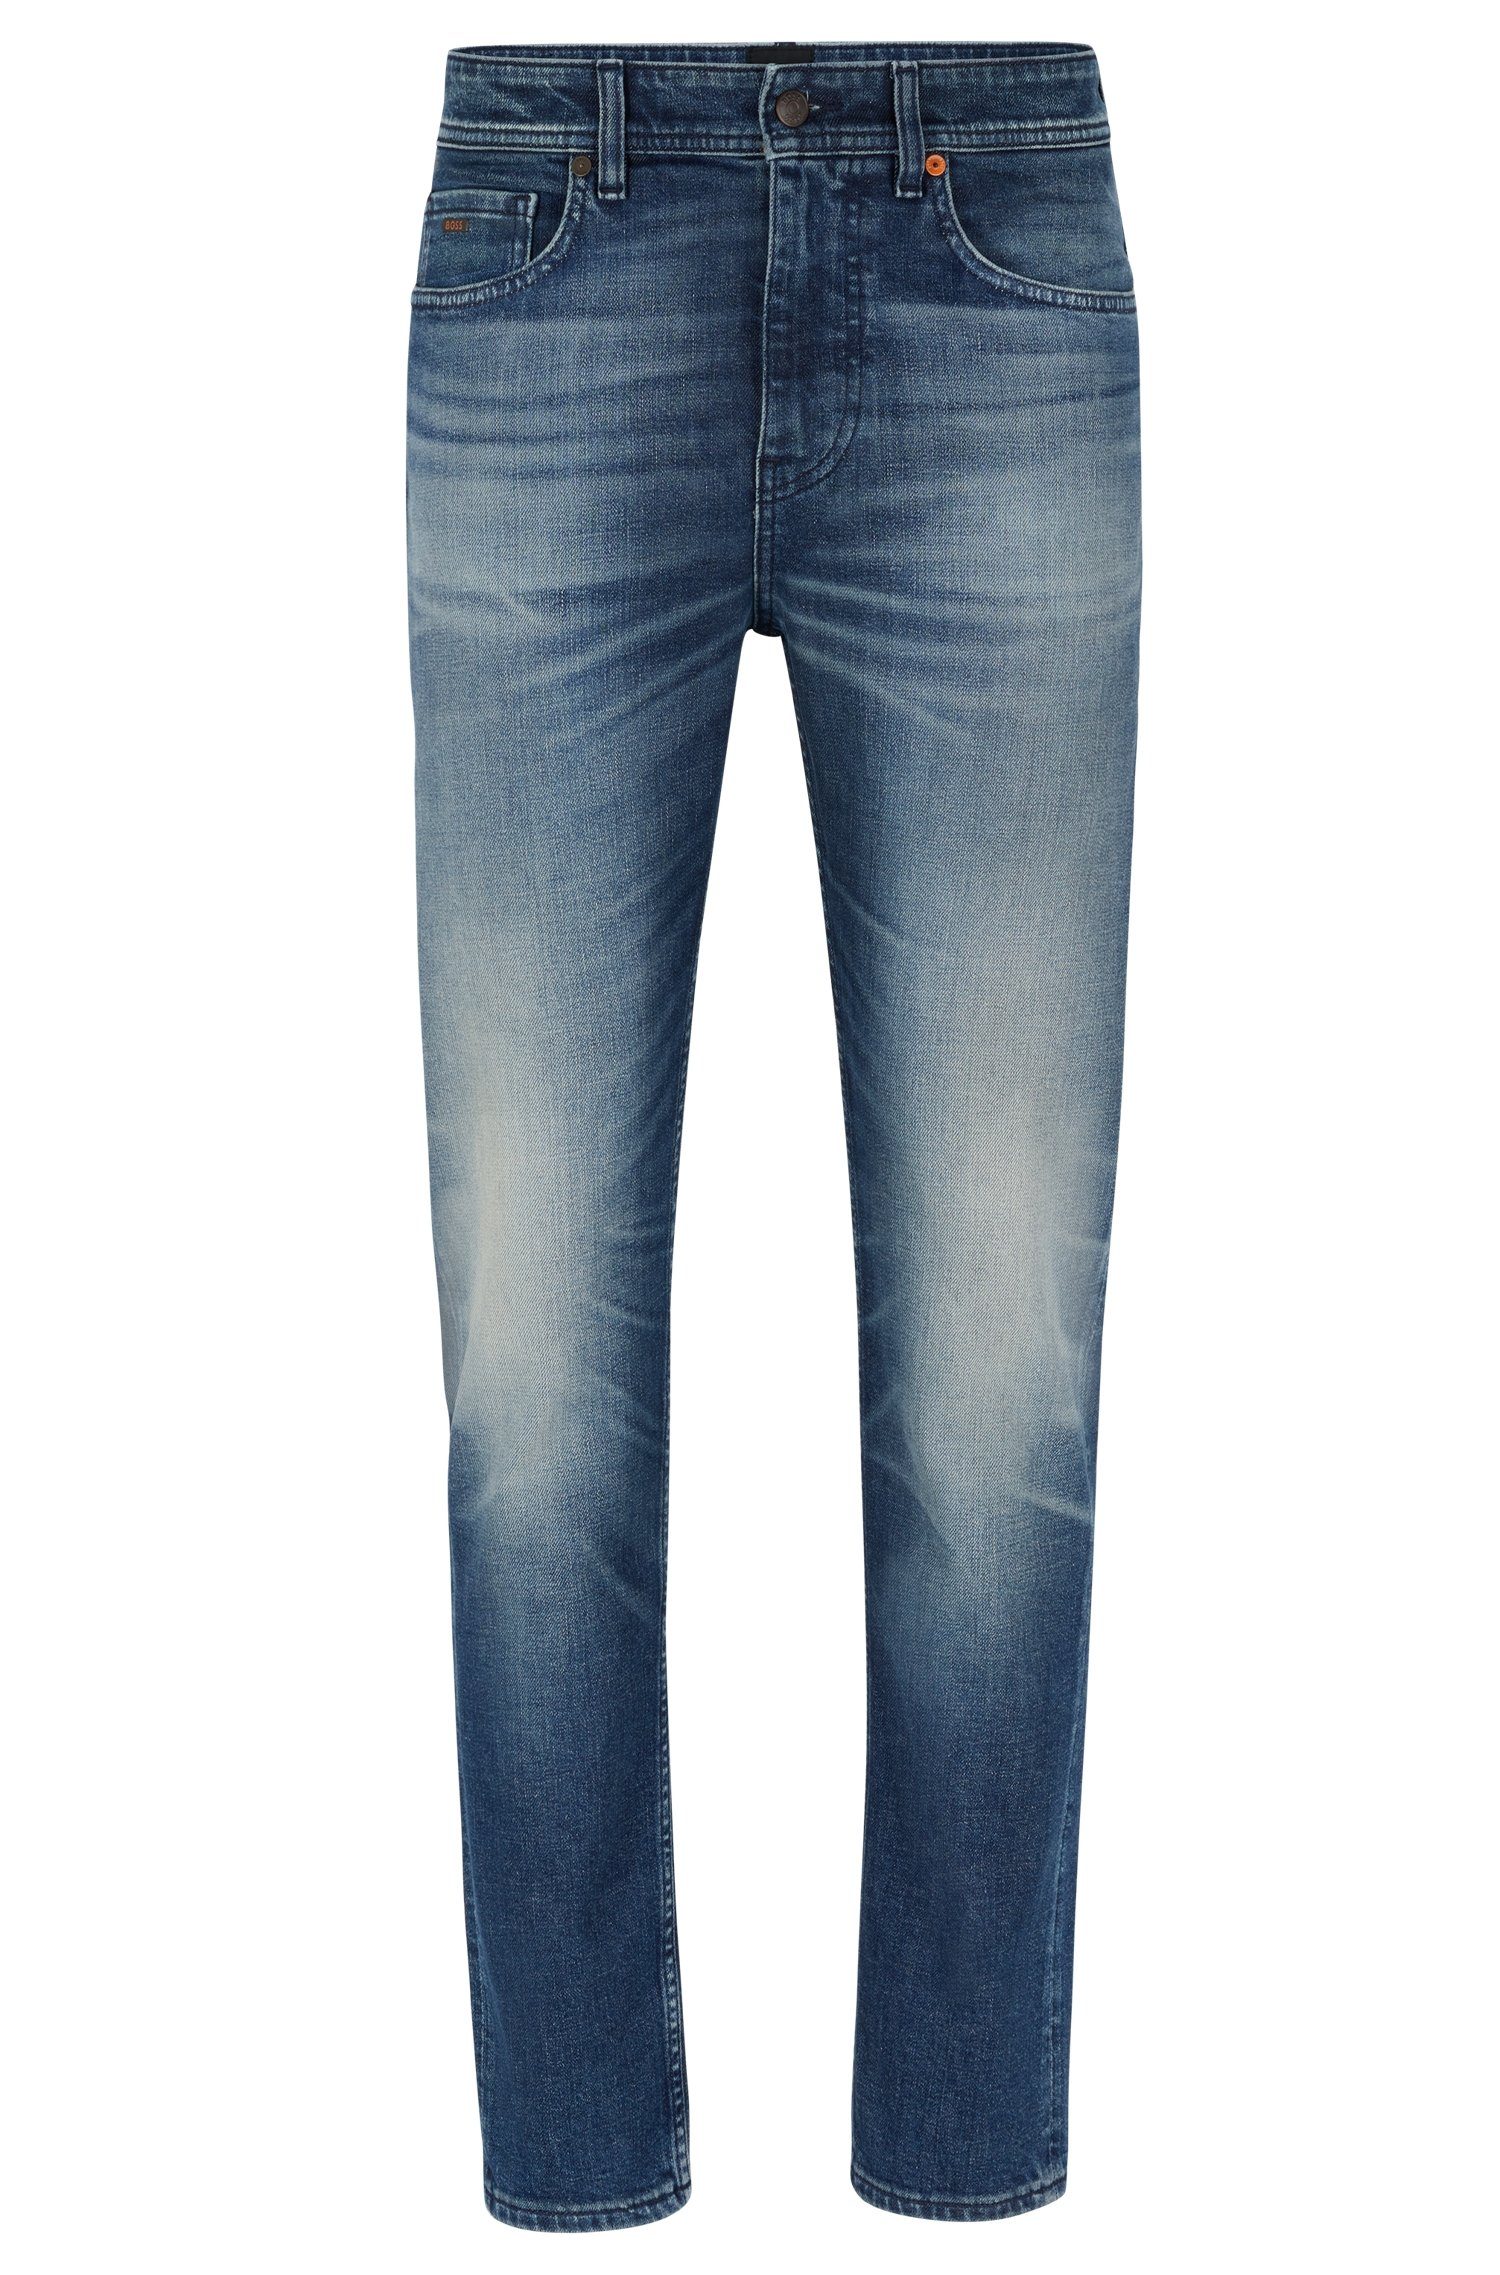 BOSS ORANGE 5-Pocket-Jeans Blaue Tapered-Fit Jeans